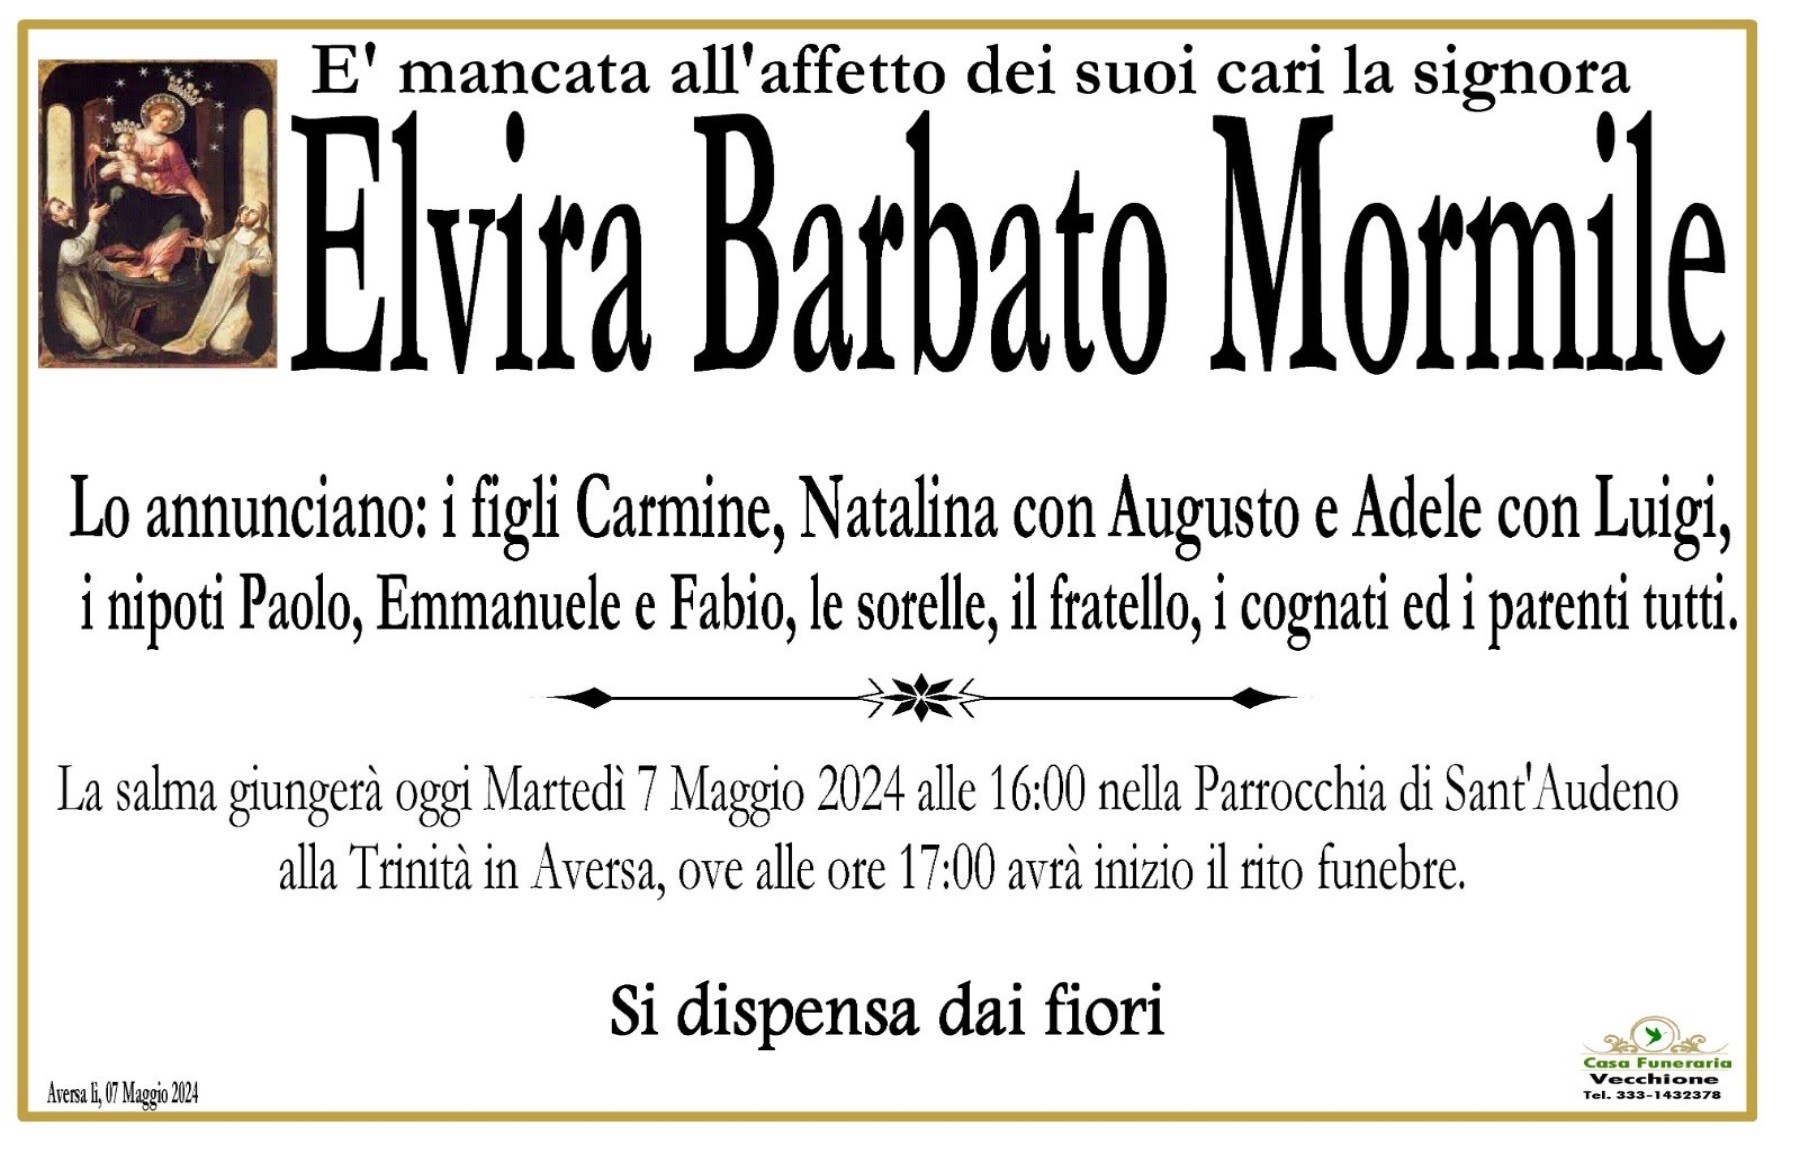 Elvira Barbato Mormile